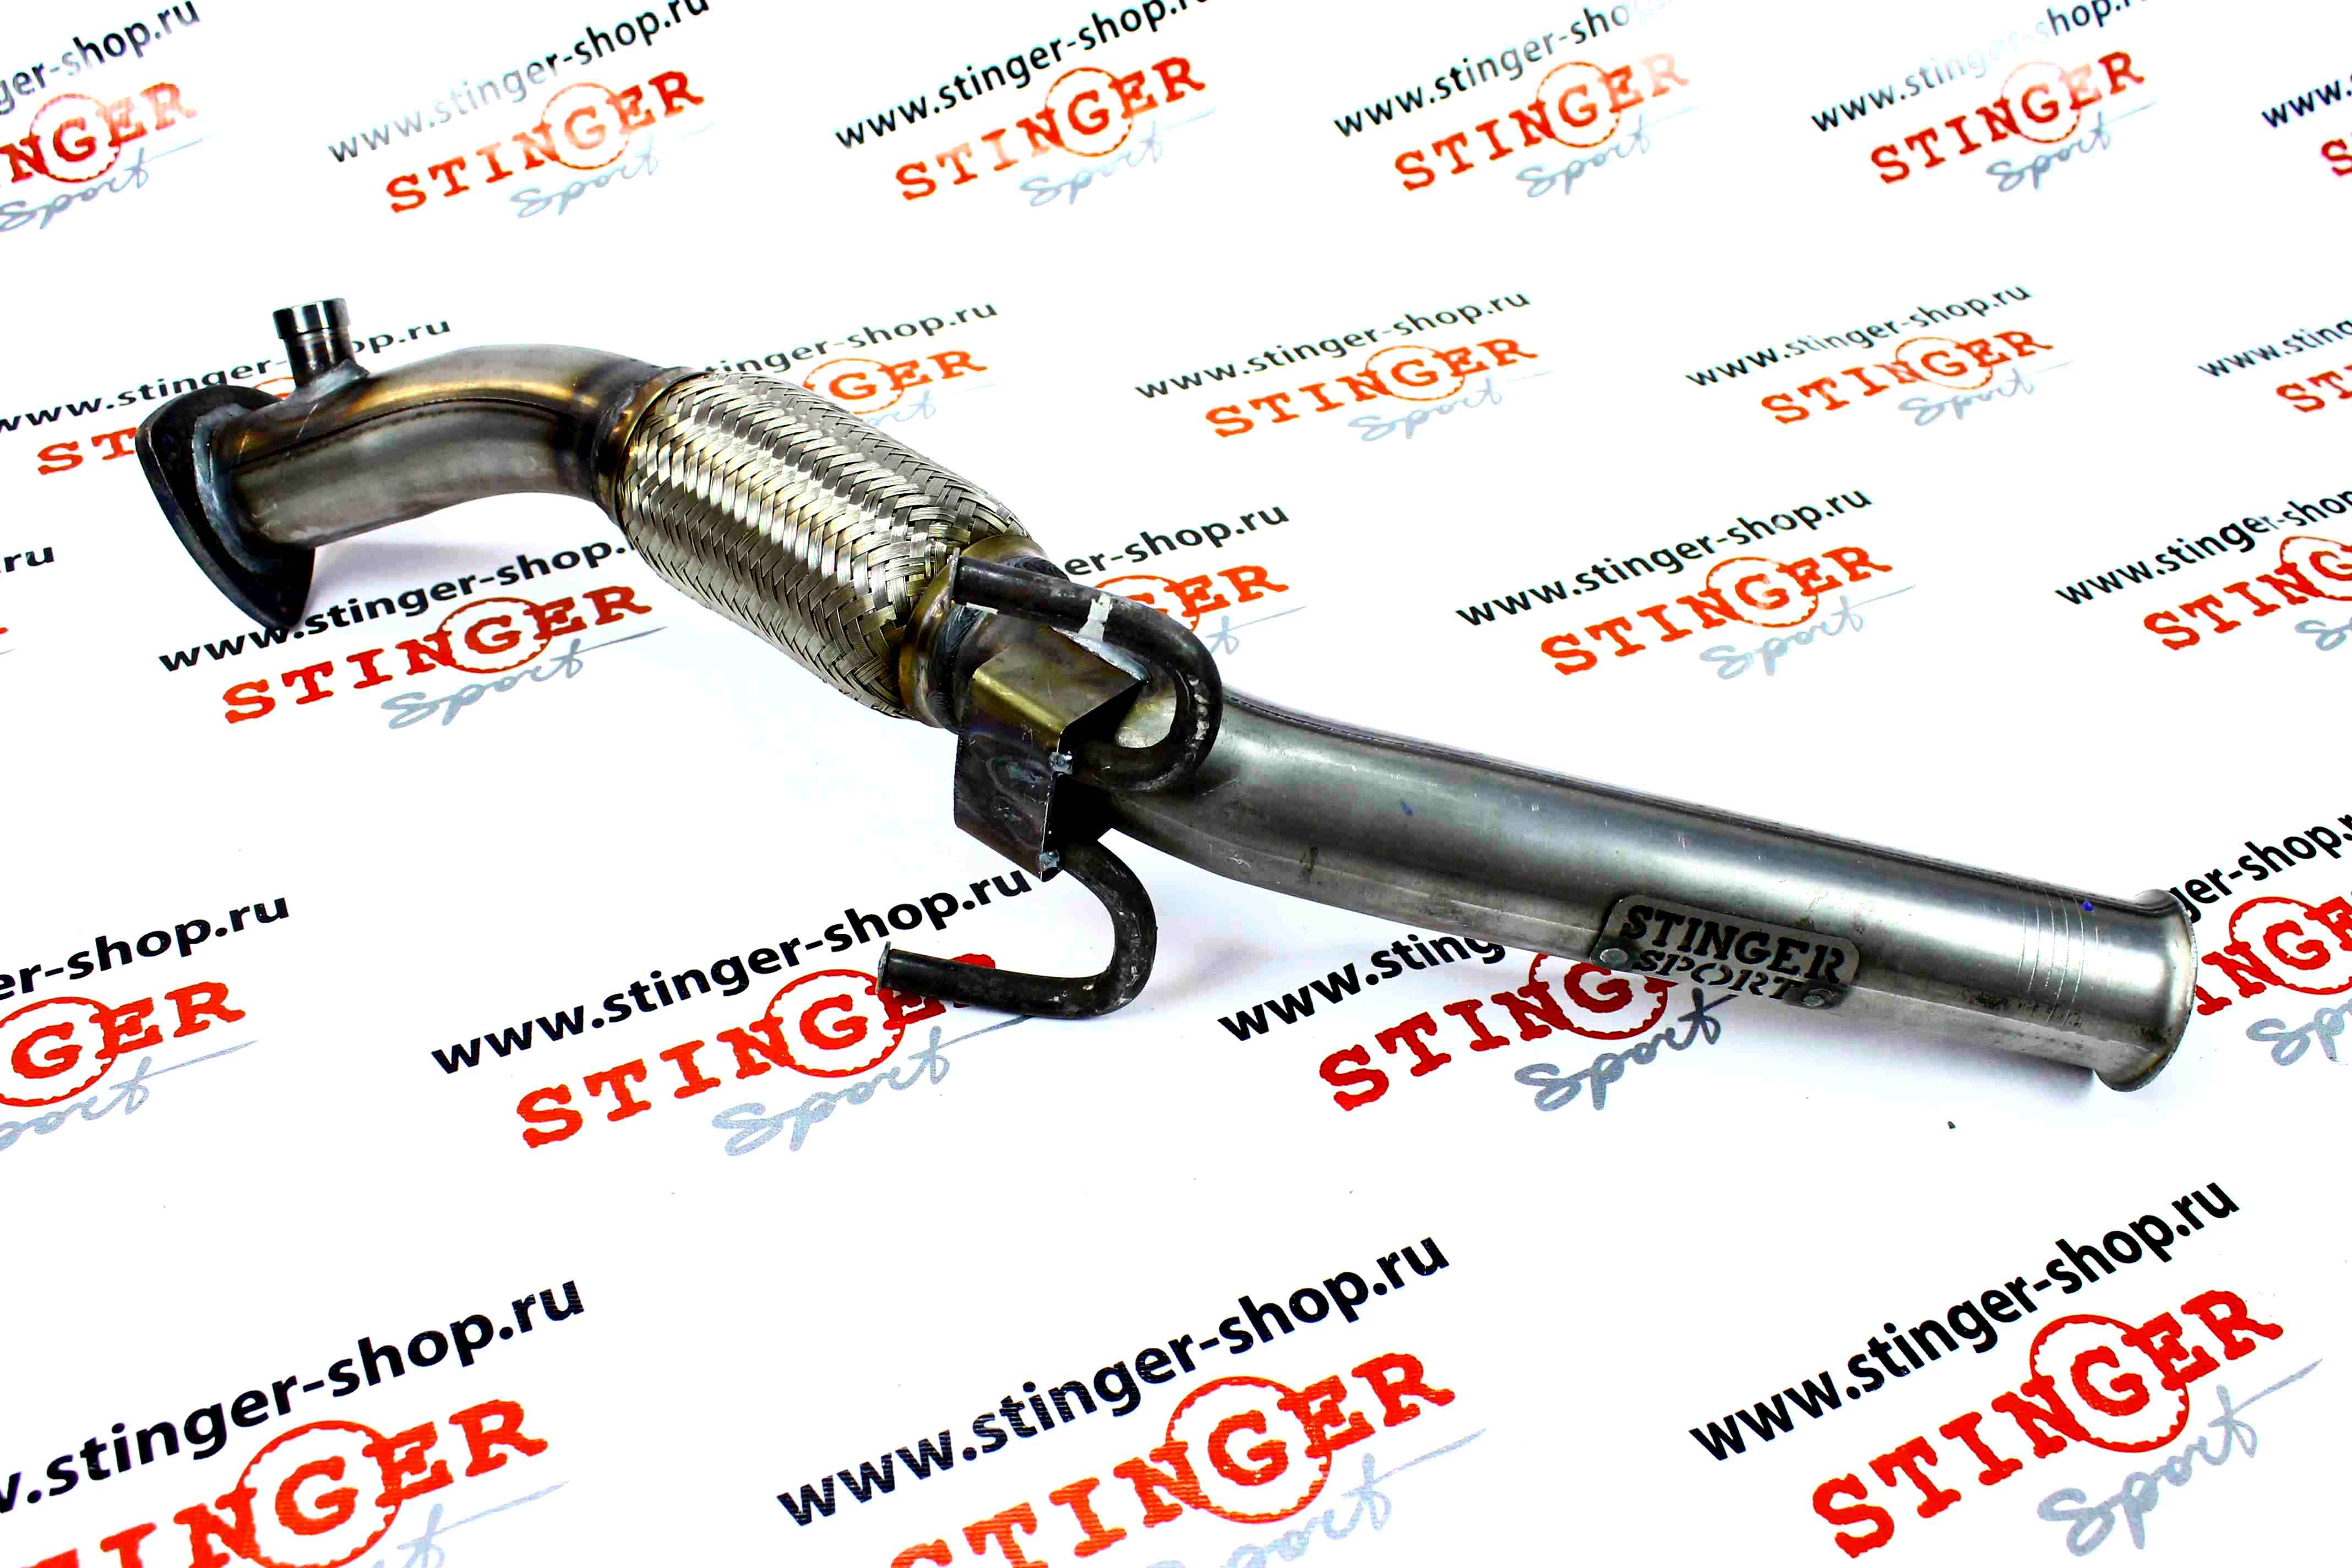 Хвост вставки замены катализатора "Stinger Sport" для а/м ВАЗ X-RAY (один датчик кислорода)